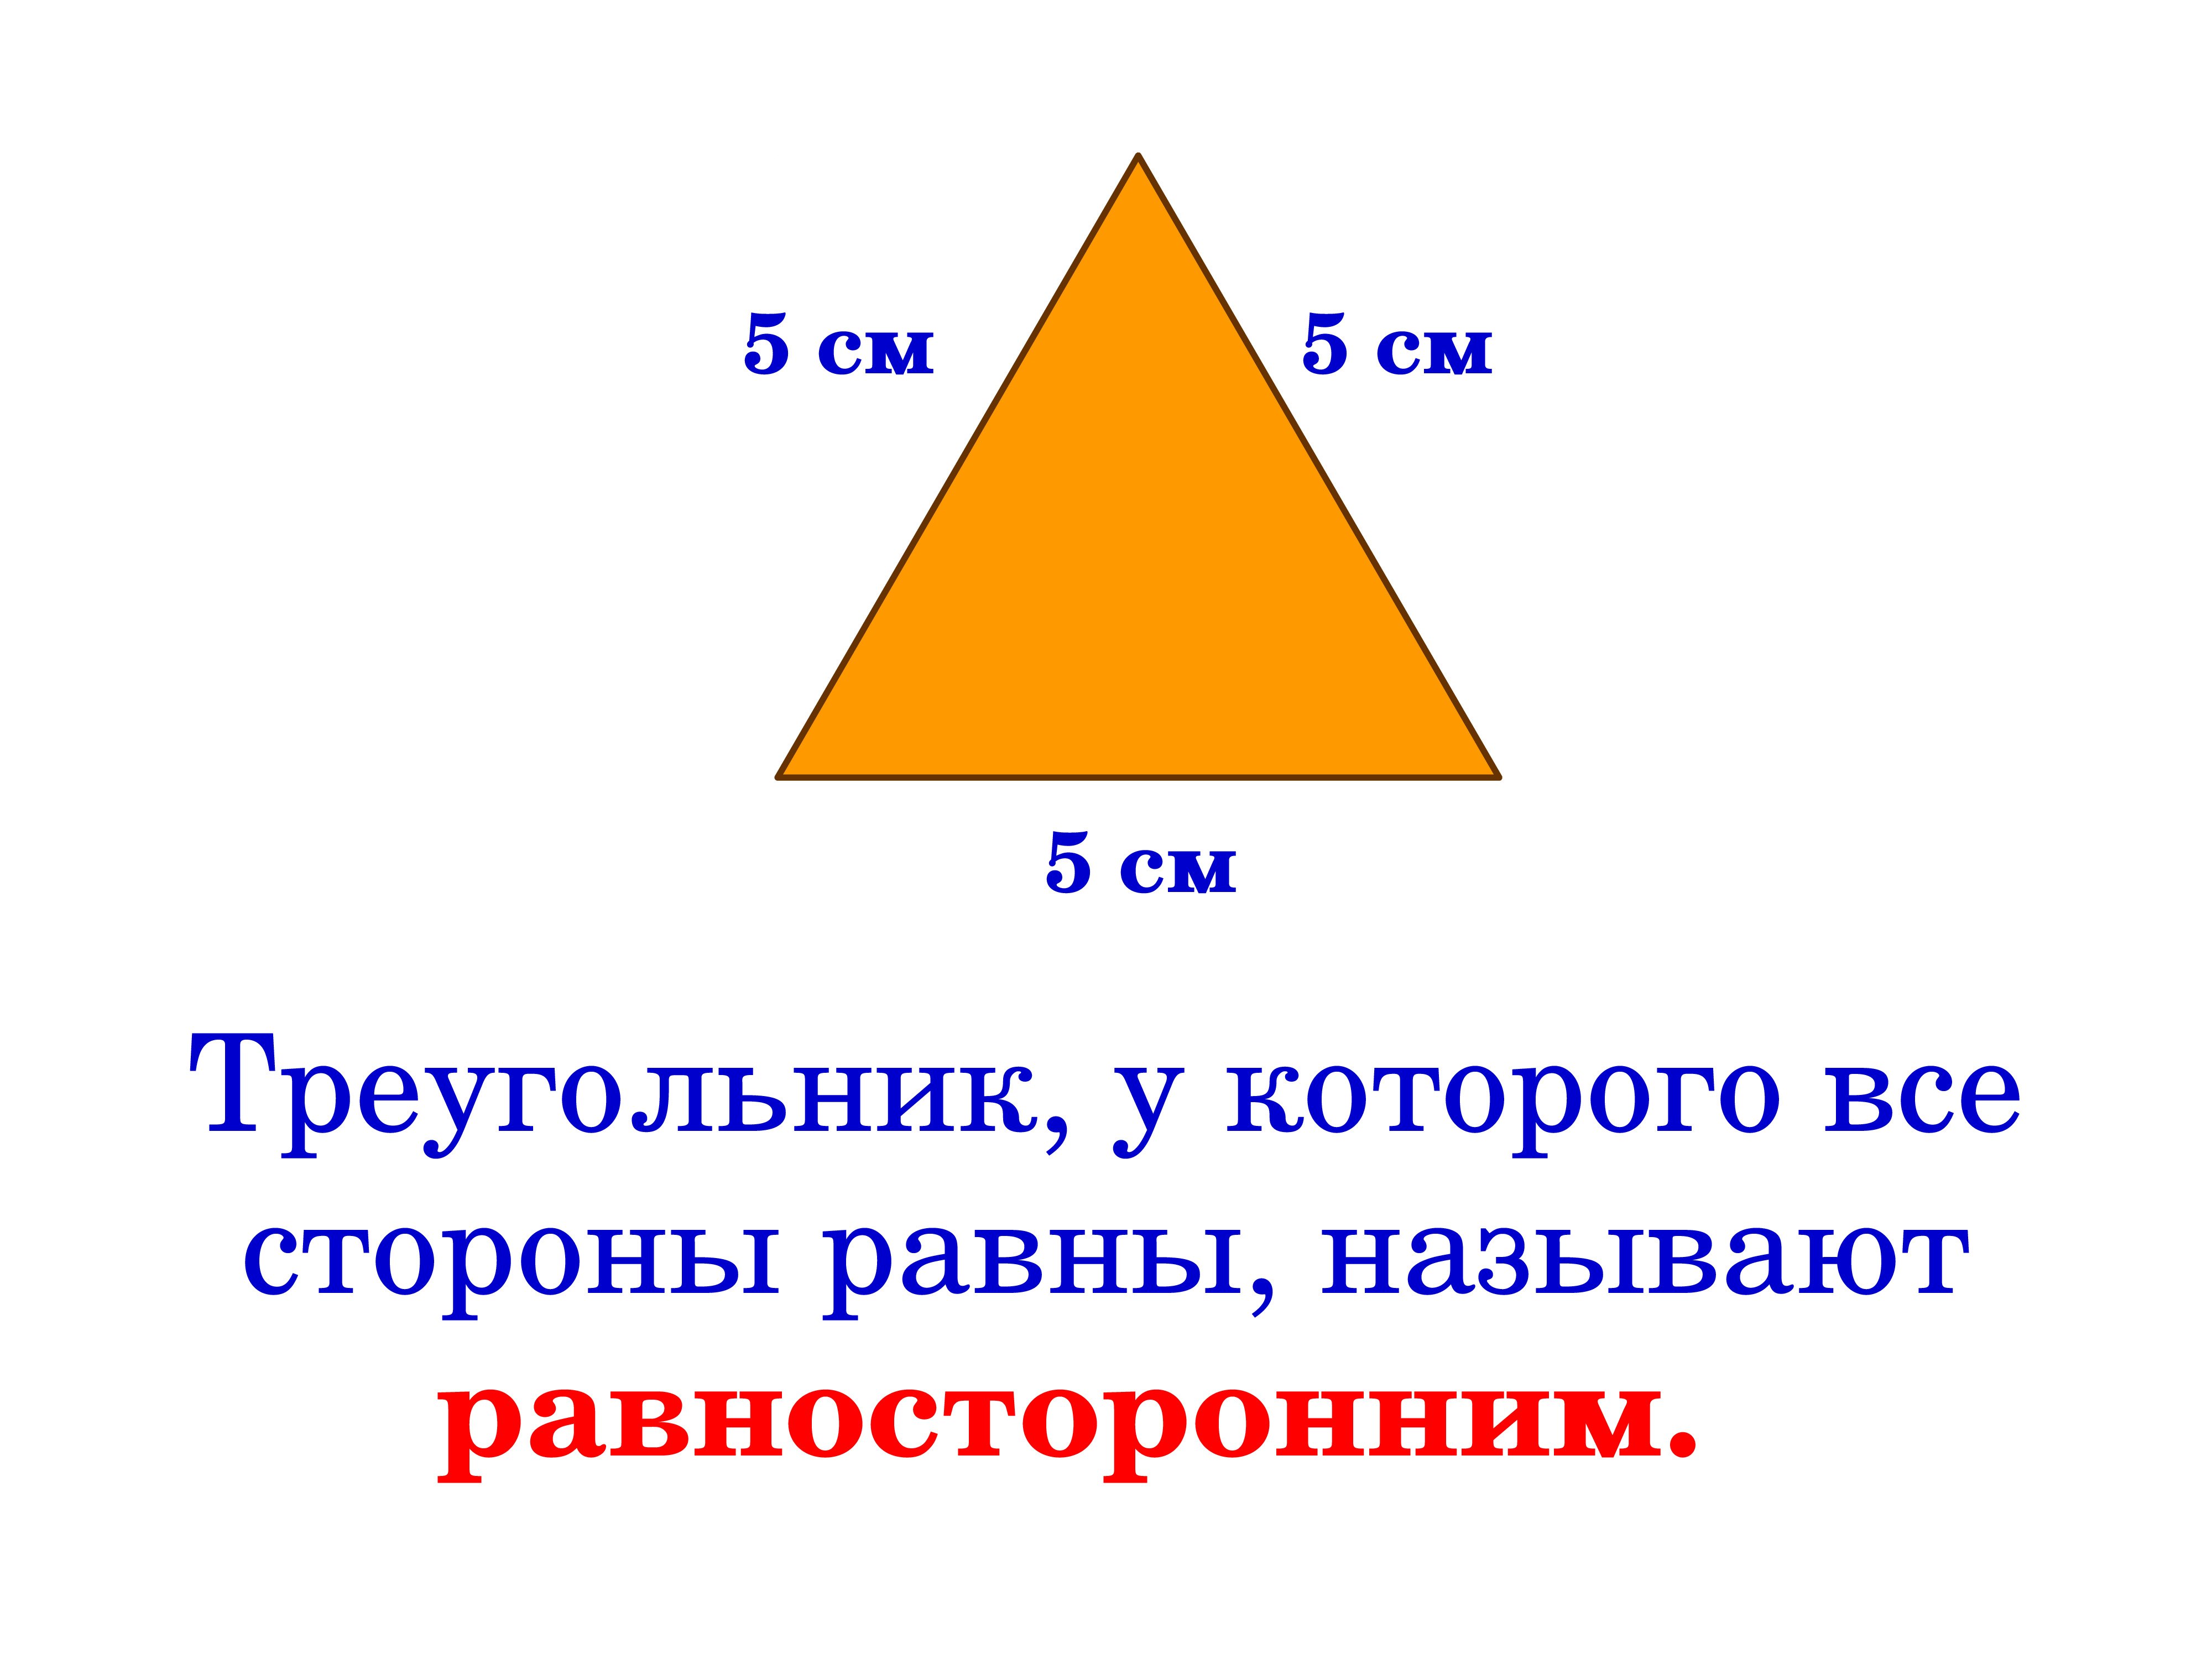 Разносторонний треугольник формула